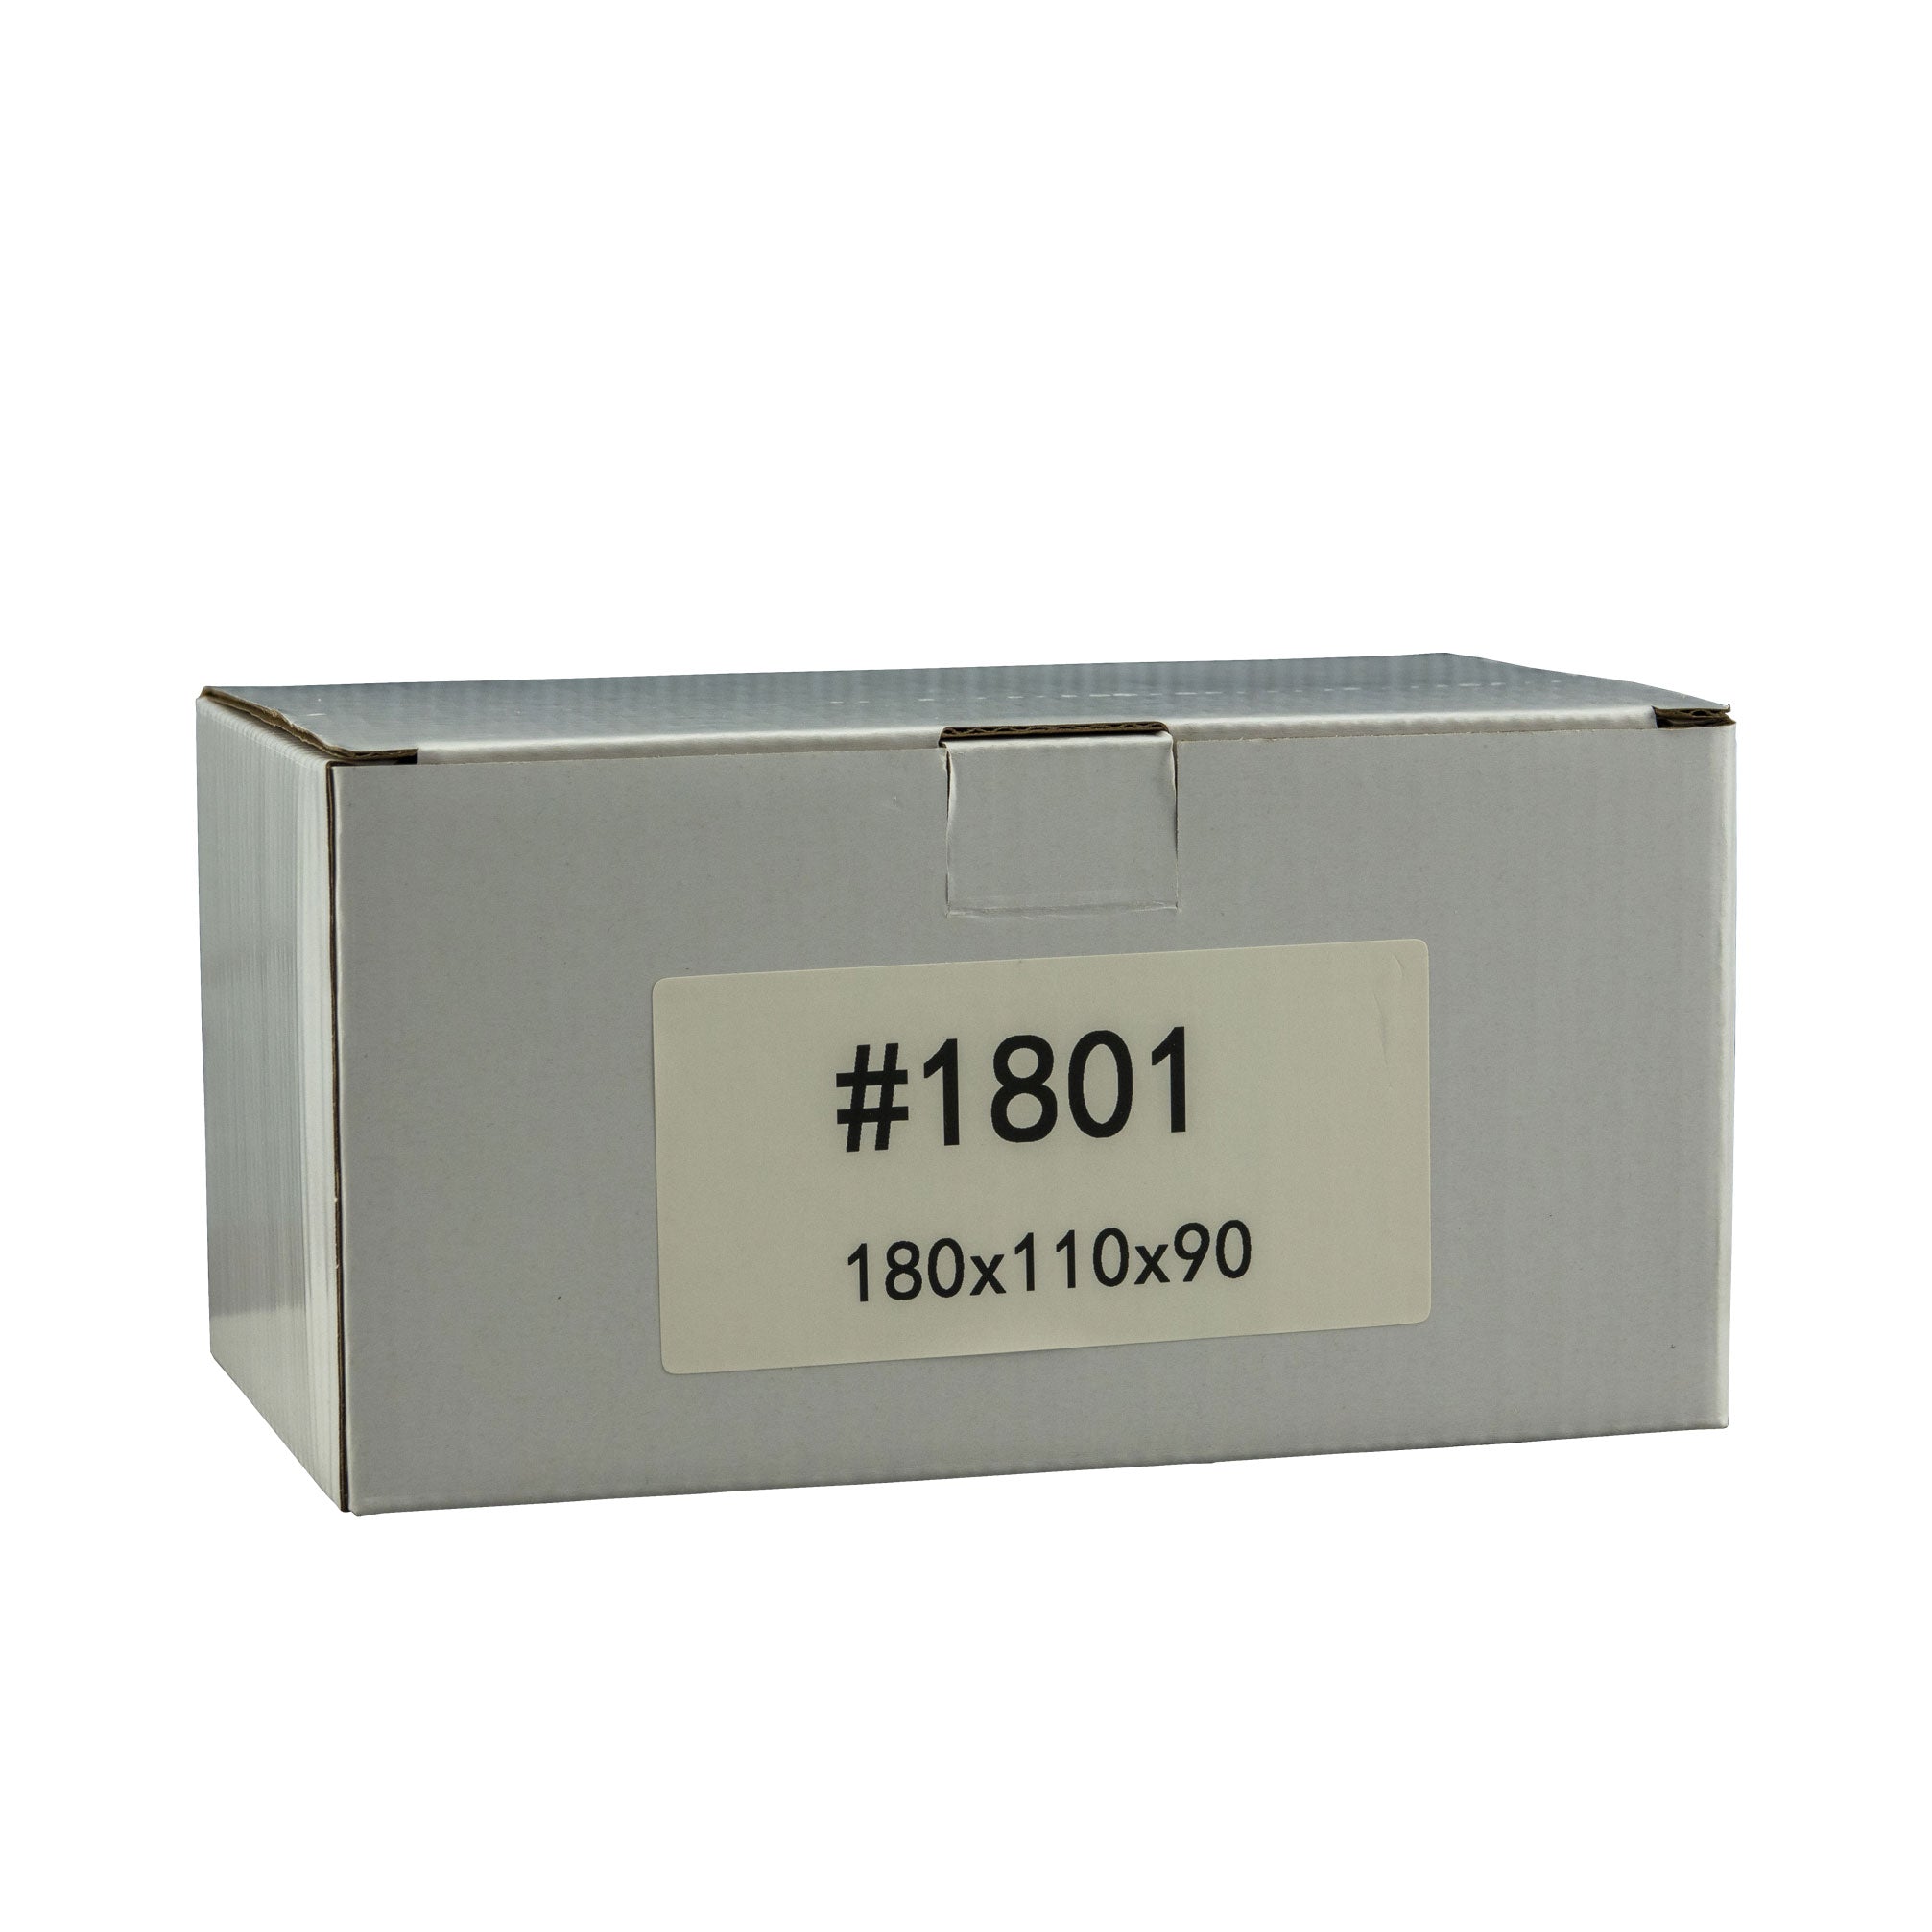 180mm x 110mm x 90mm White Carton Cardboard Shipping Box (#1801)